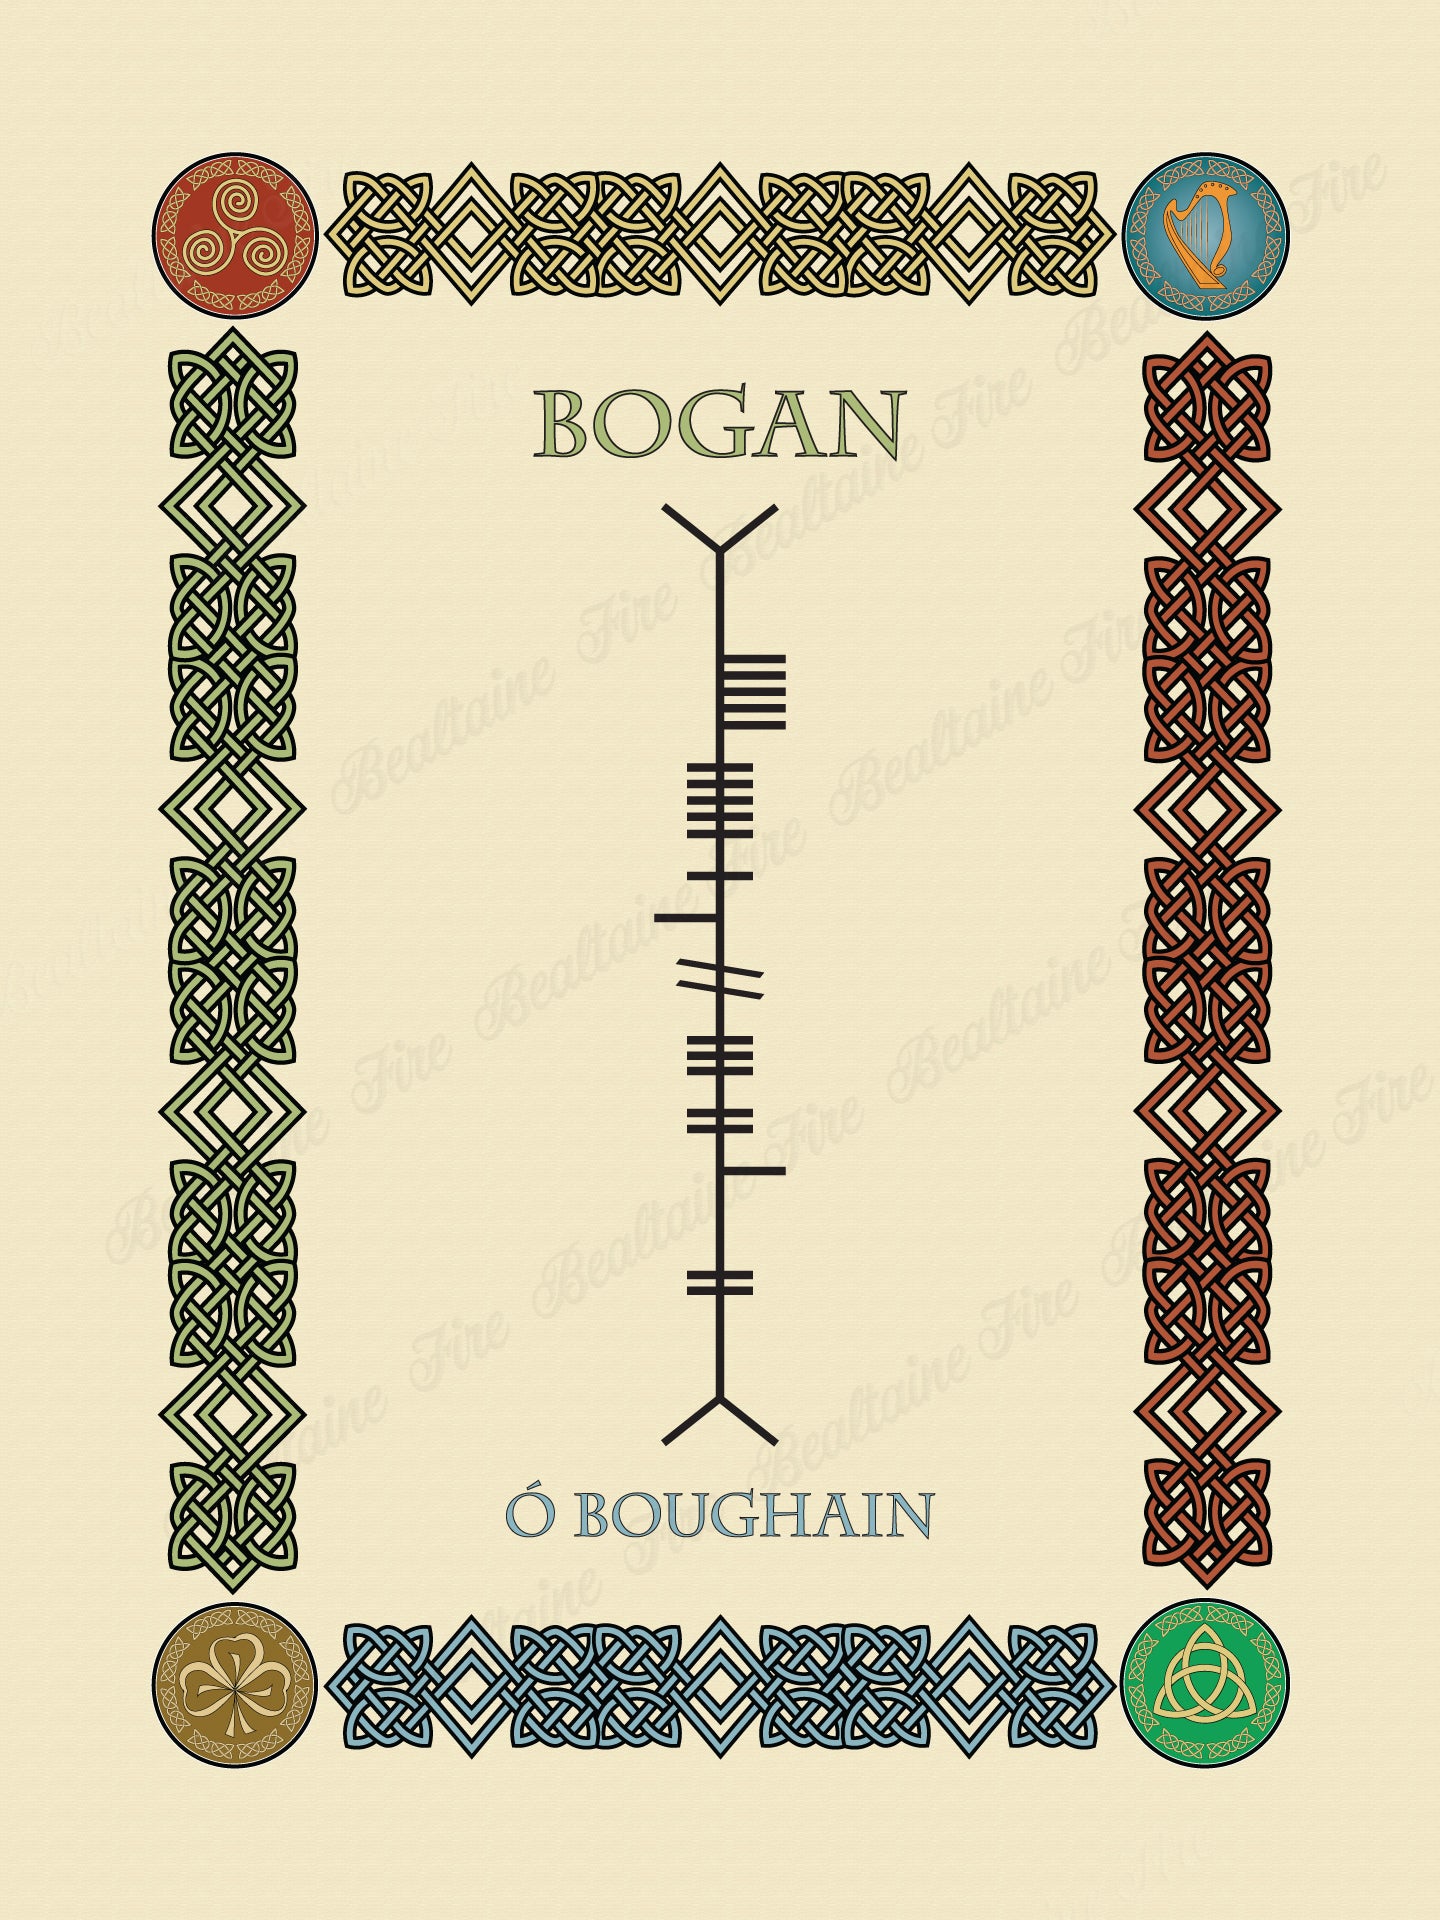 Bogan in Old Irish and Ogham - Premium luster unframed print